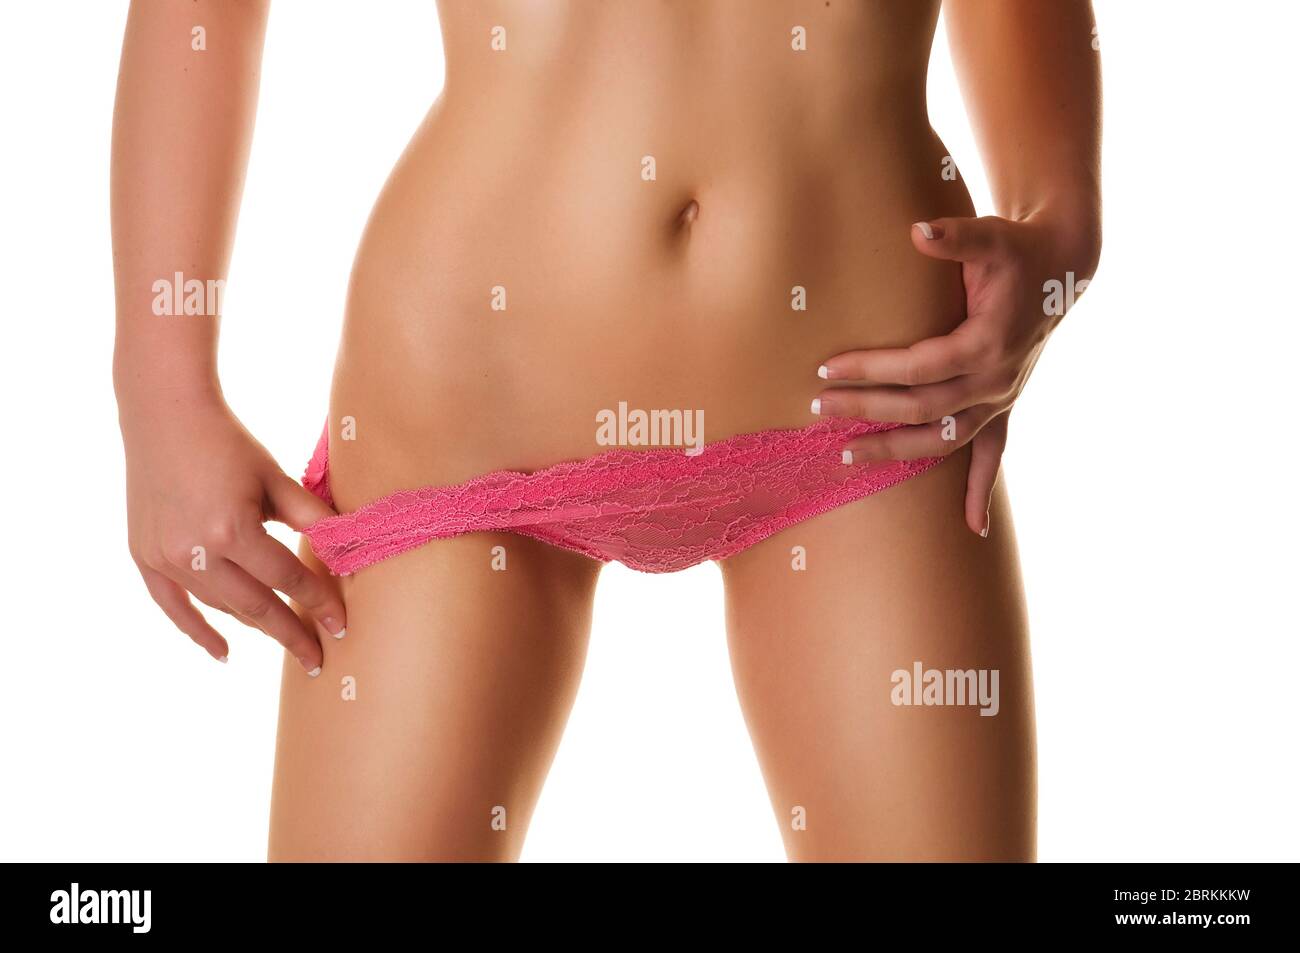 Beautiful slim female body. Close-up photo of ideal elastic